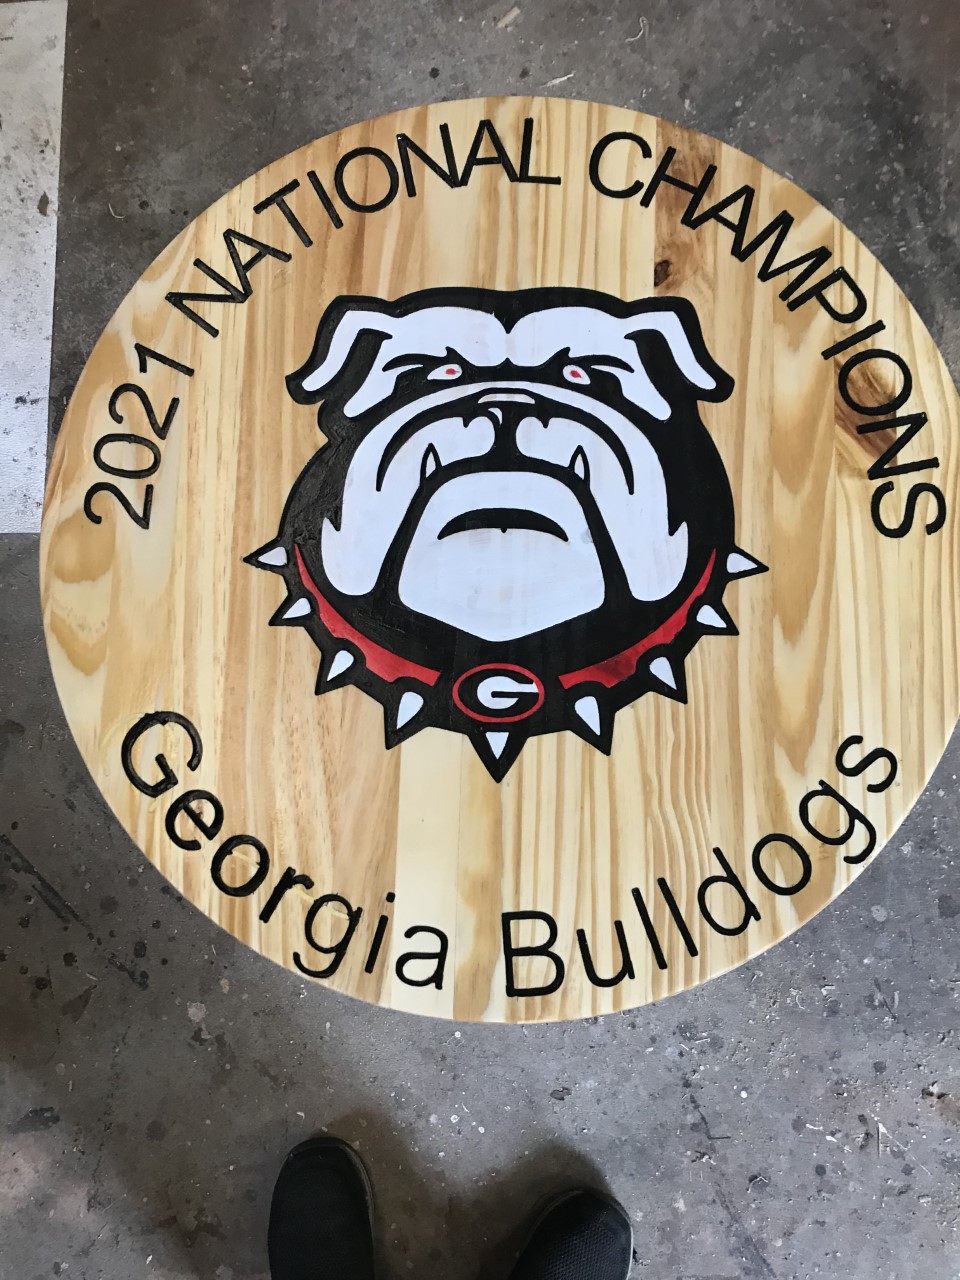 national champs bulldog head.jpg